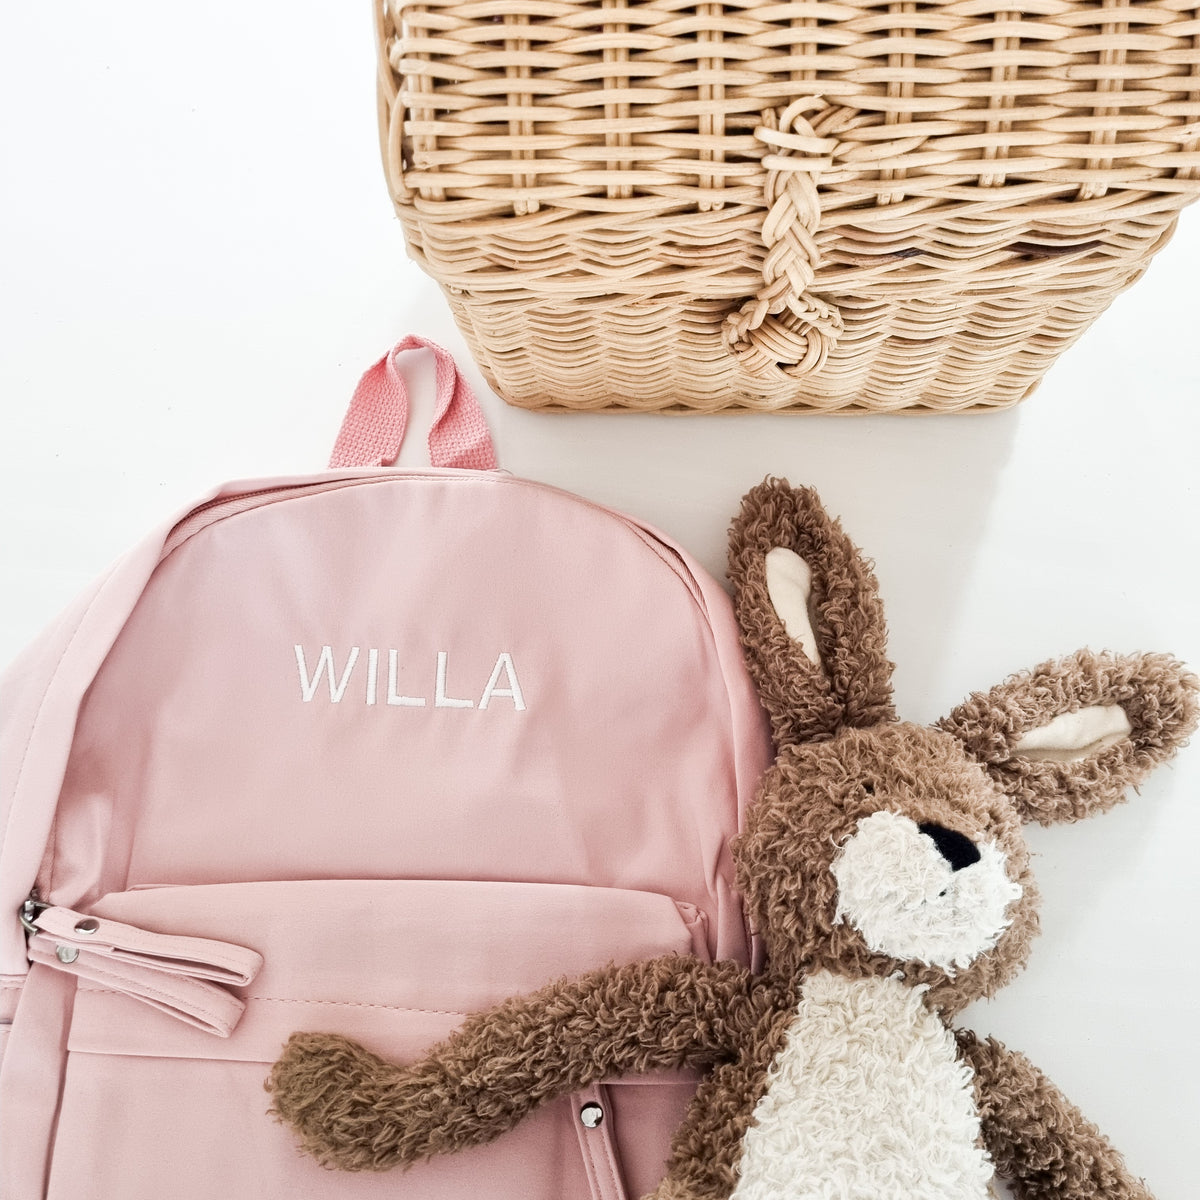 Preschool Bag - Pink